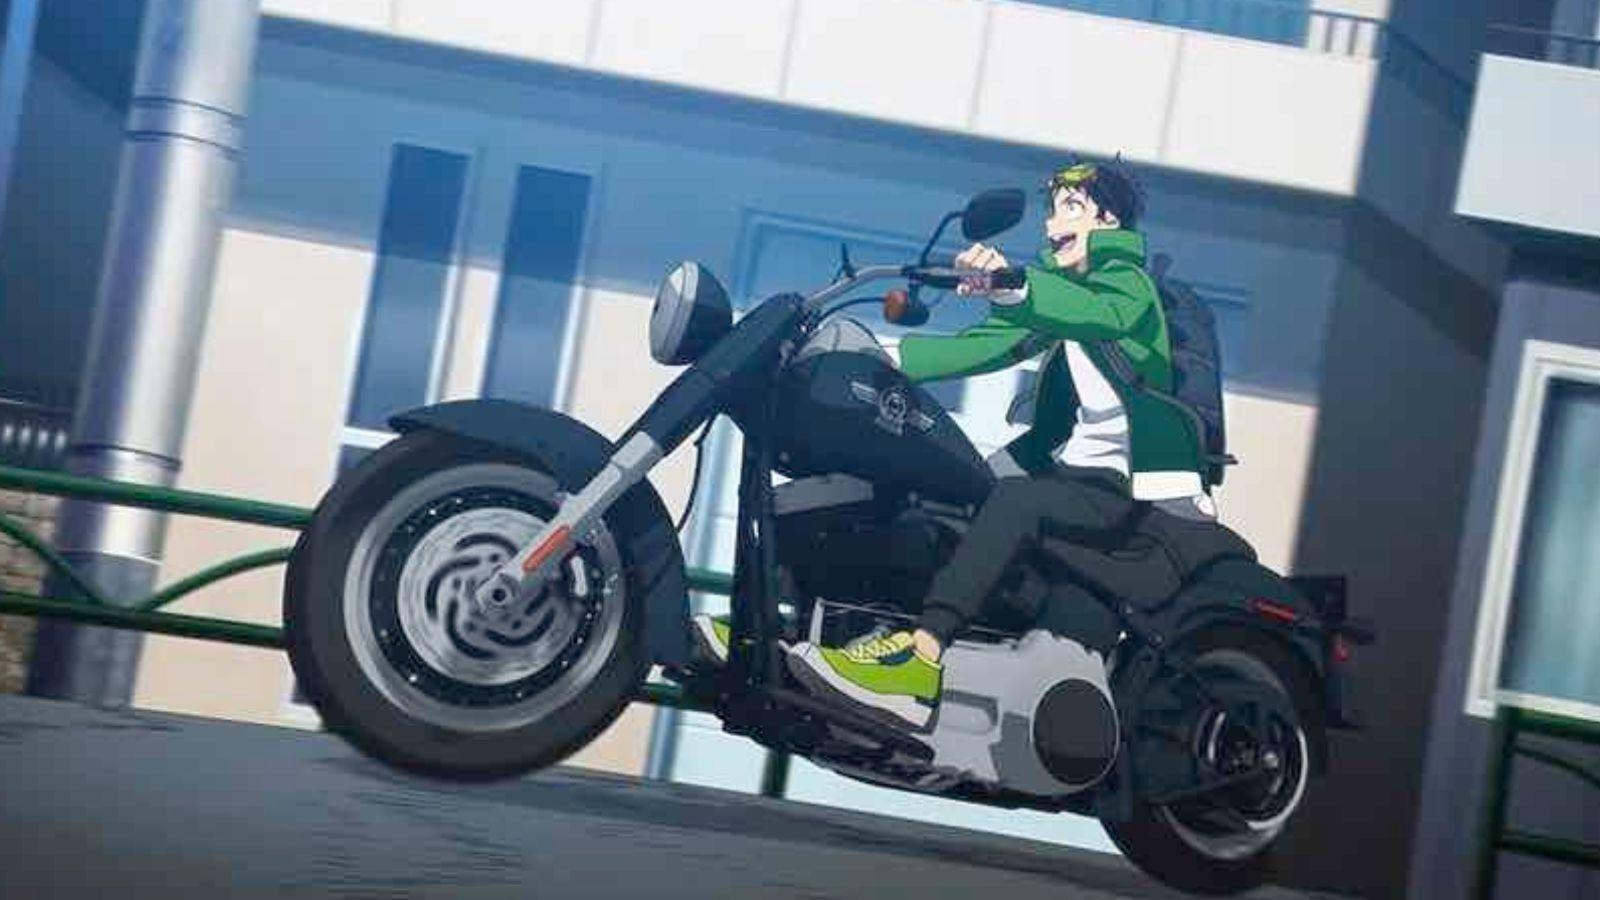 Akira riding a bike in Zom 100